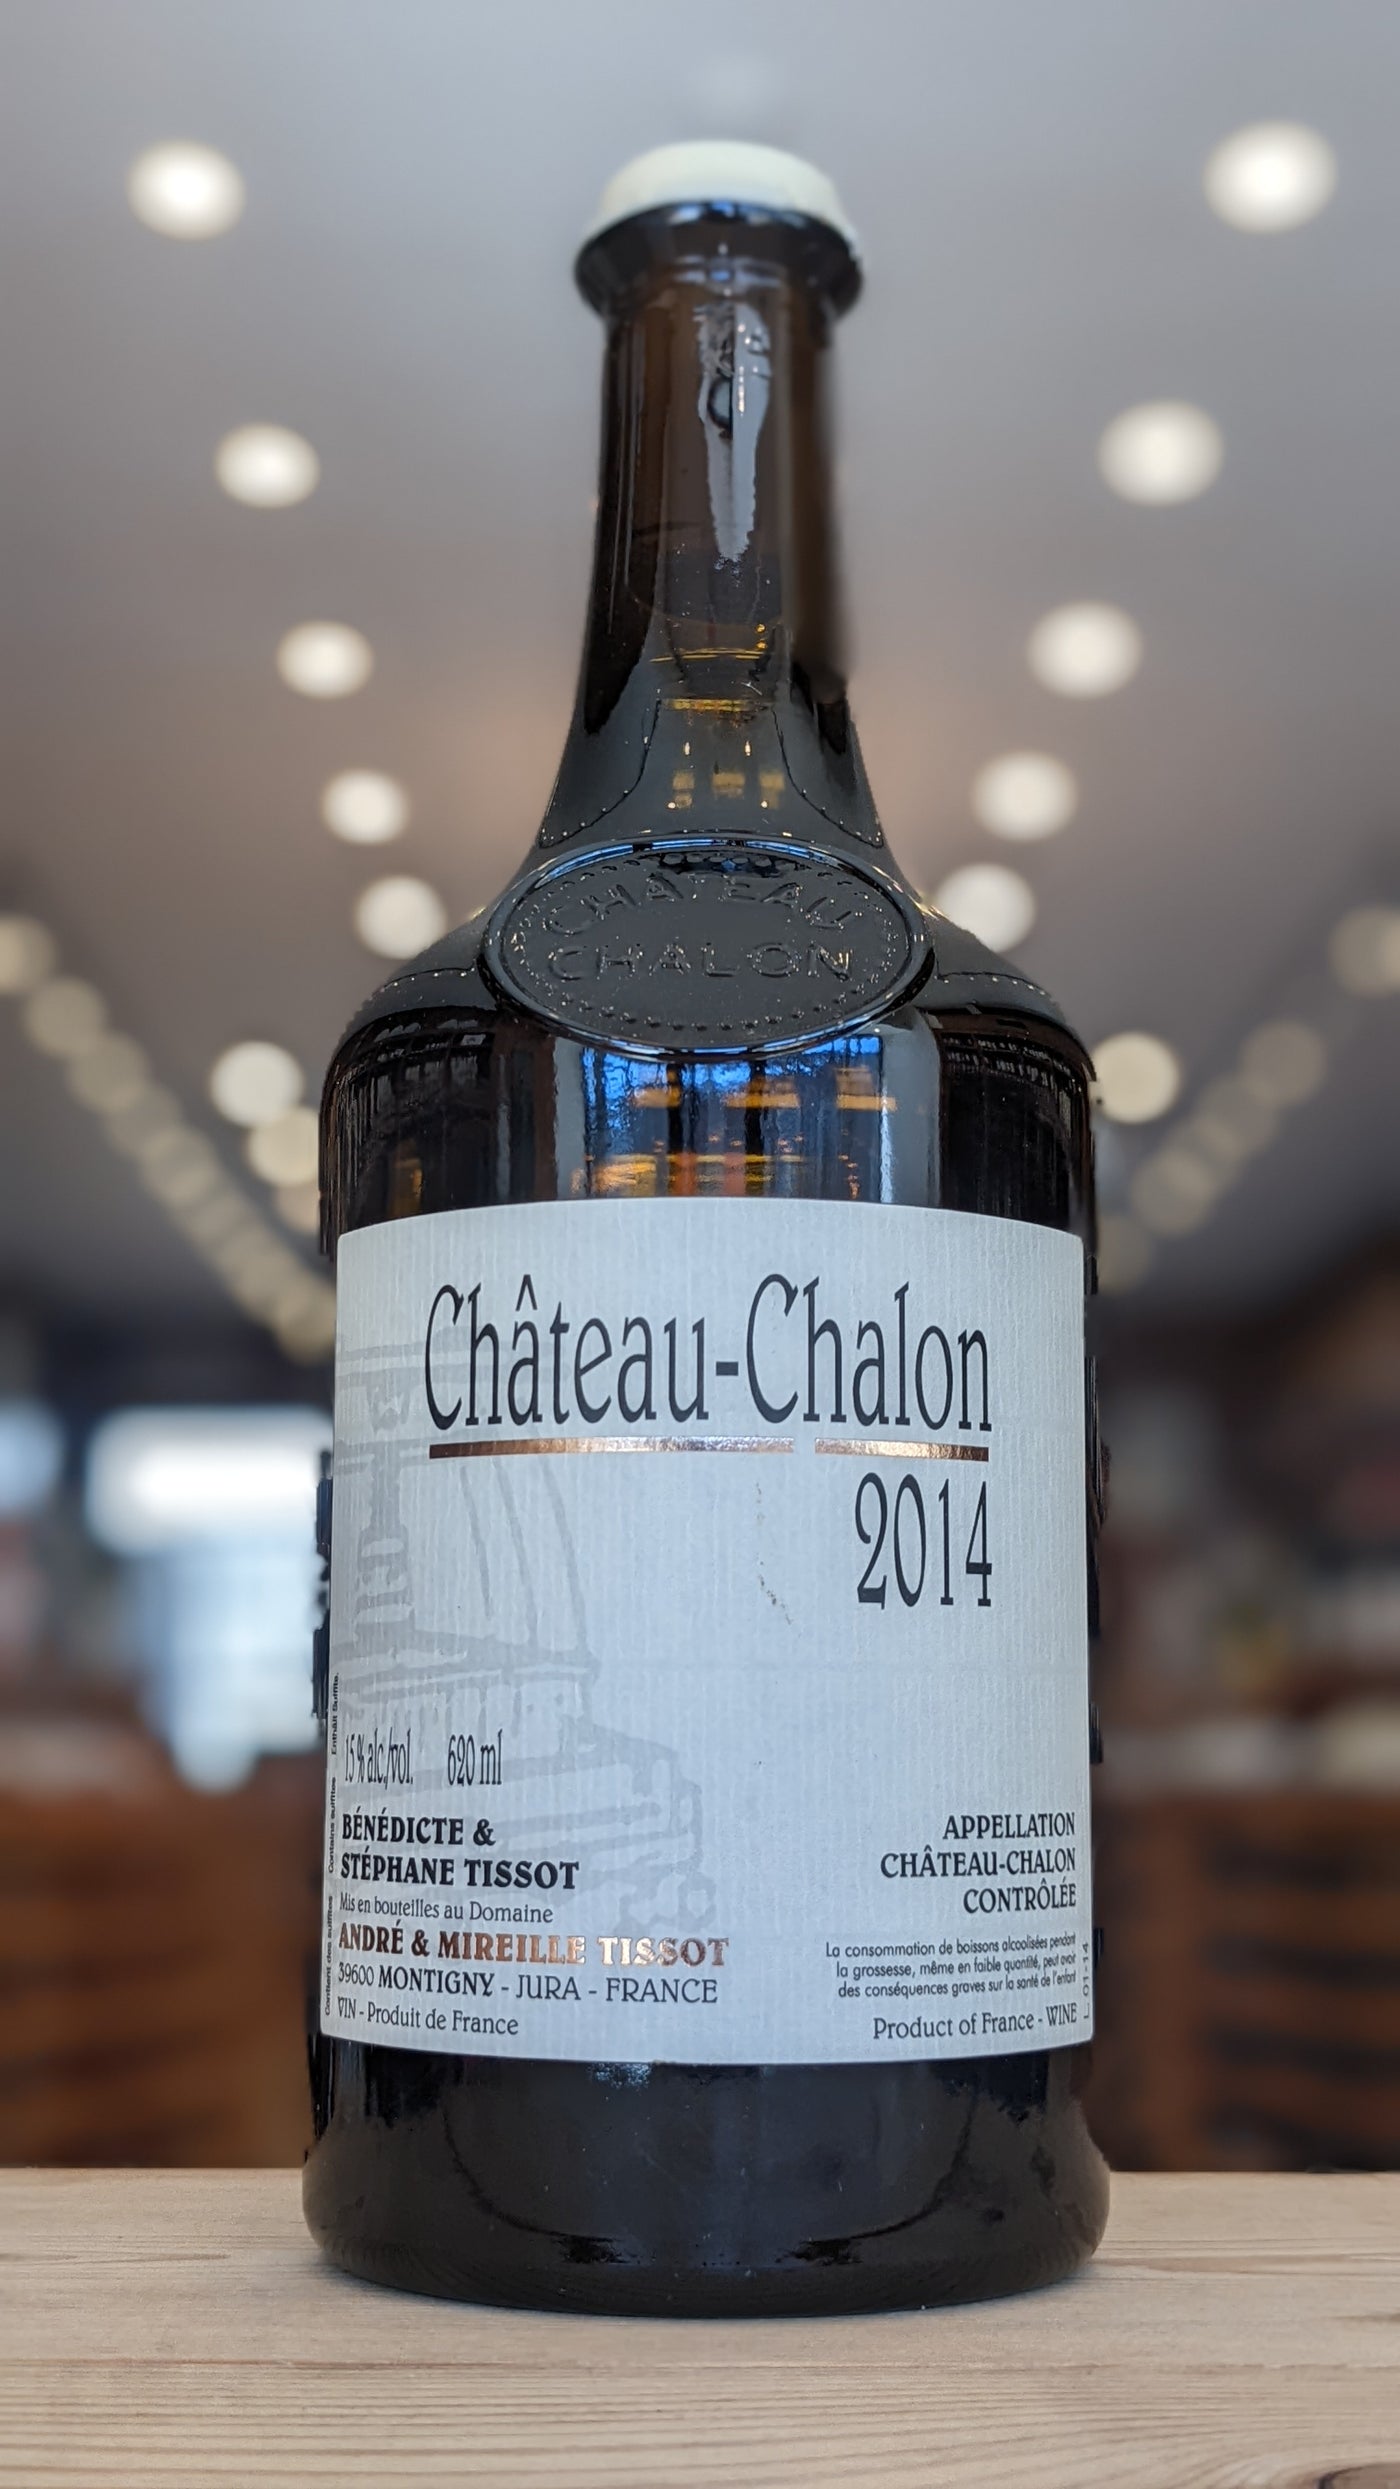 Benedicte et Stephane Tissot Chateau-Chalon 2014 620ml